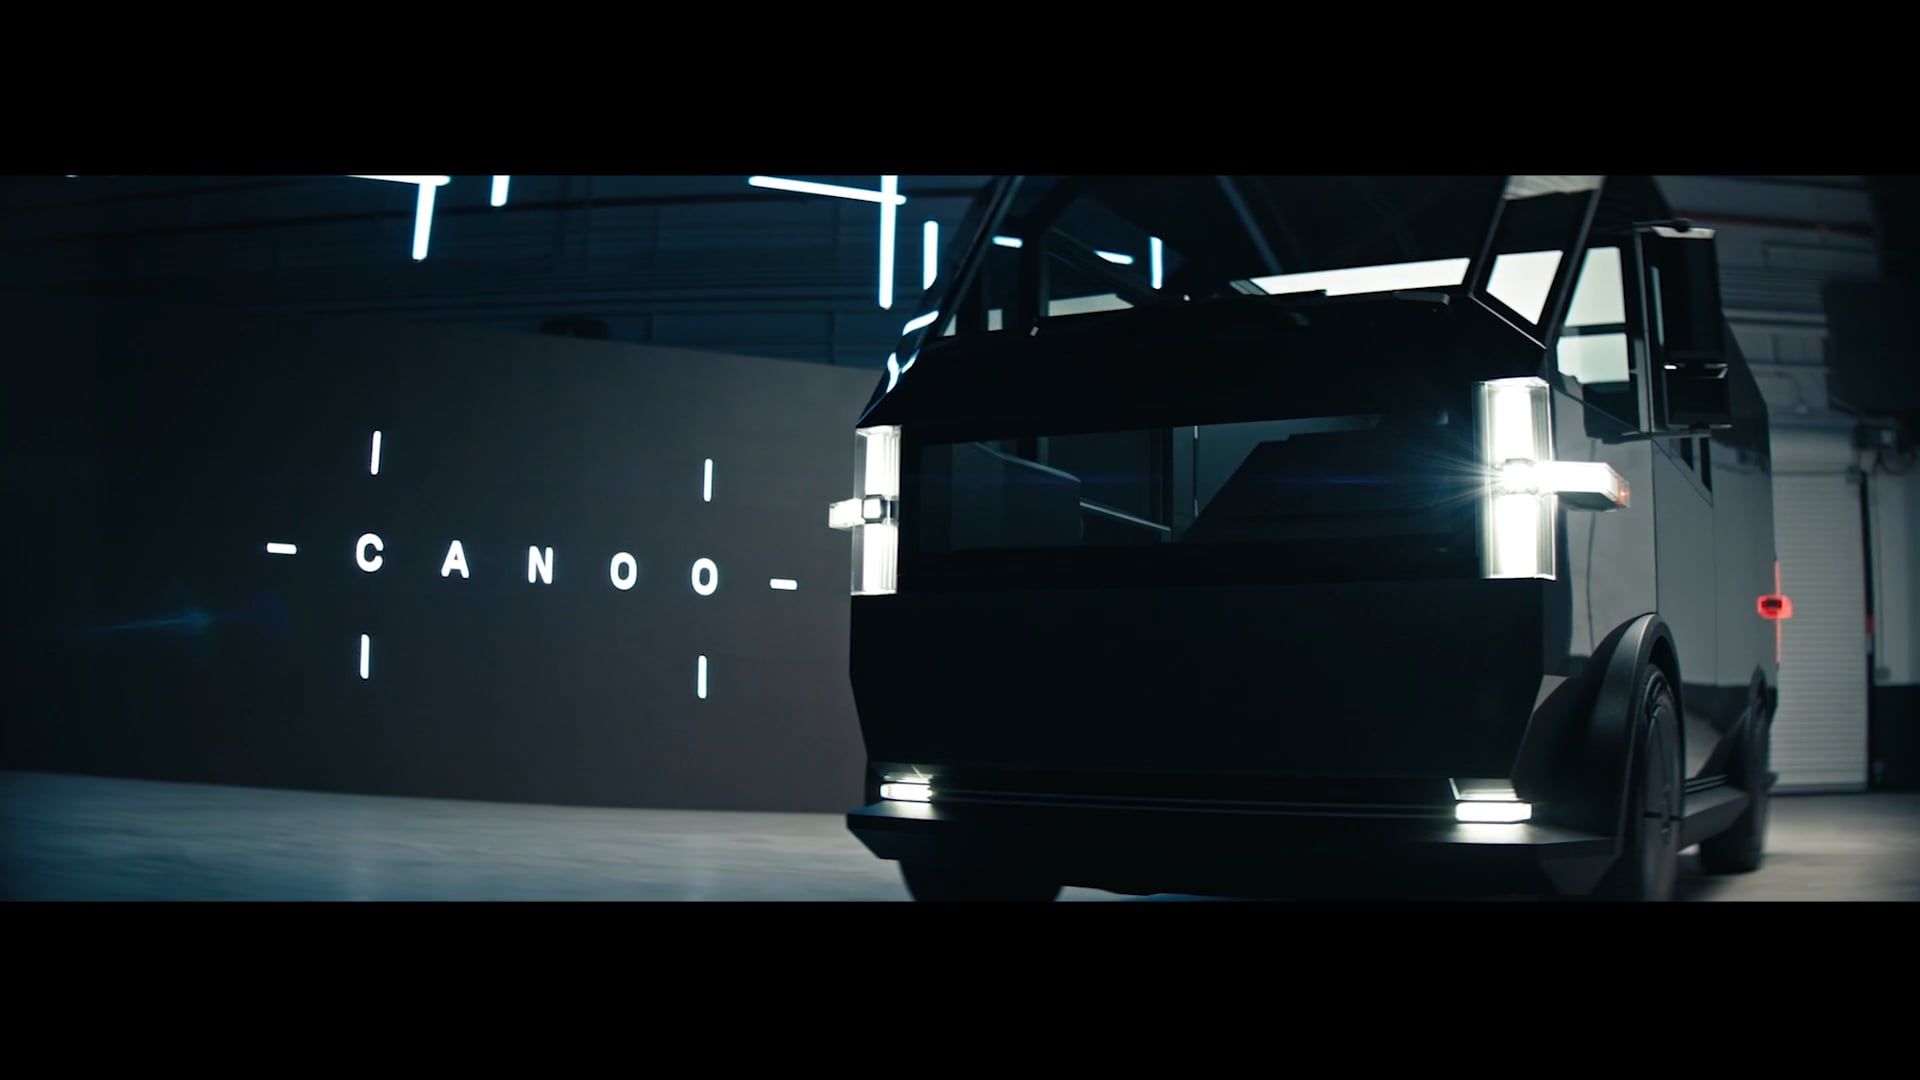 Canoo - "Multi Purpose Vehicle"